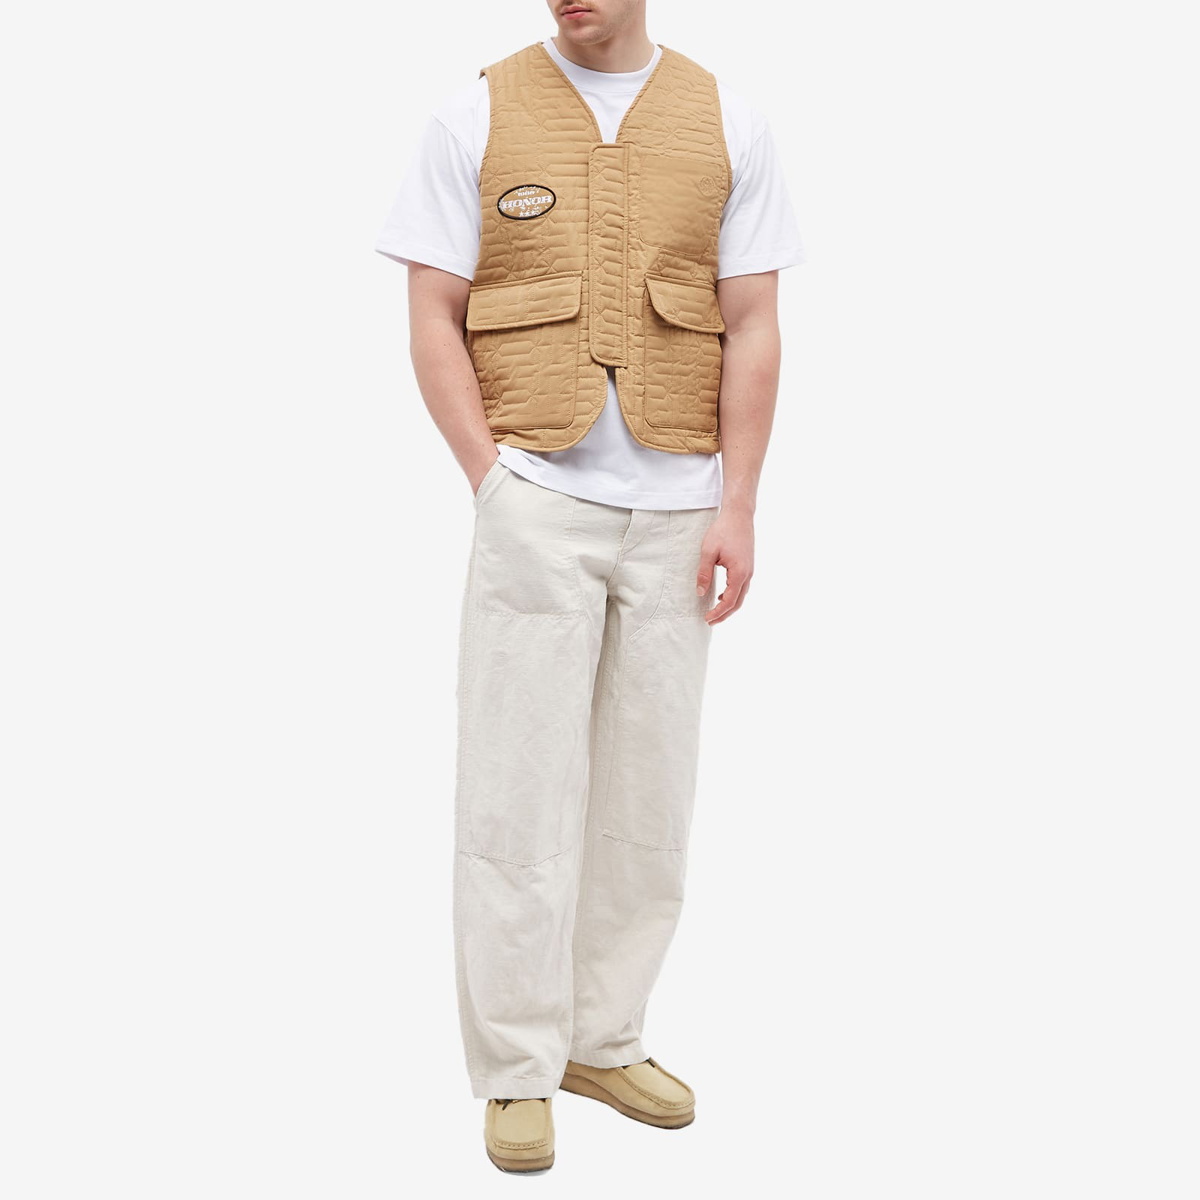 CornerStone Washed Duck Cloth Vest | Product | CornerStone